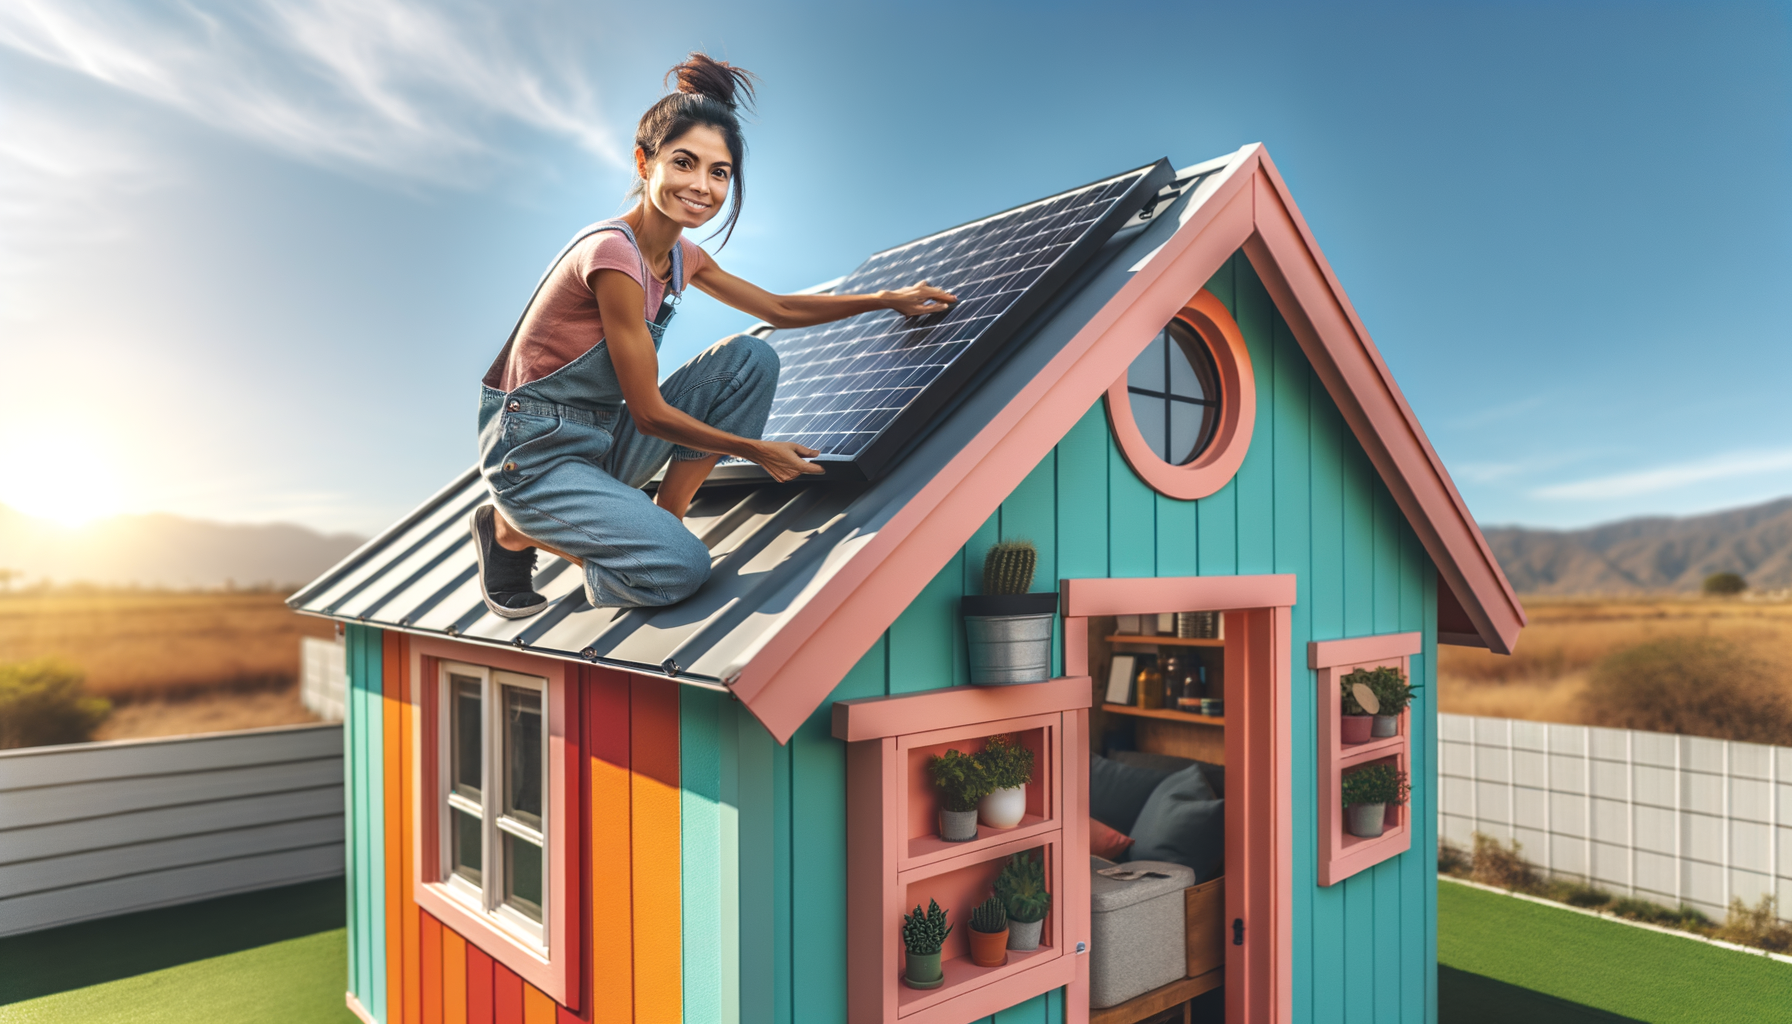 ALT: Tiny home owner setting up DIY solar panel